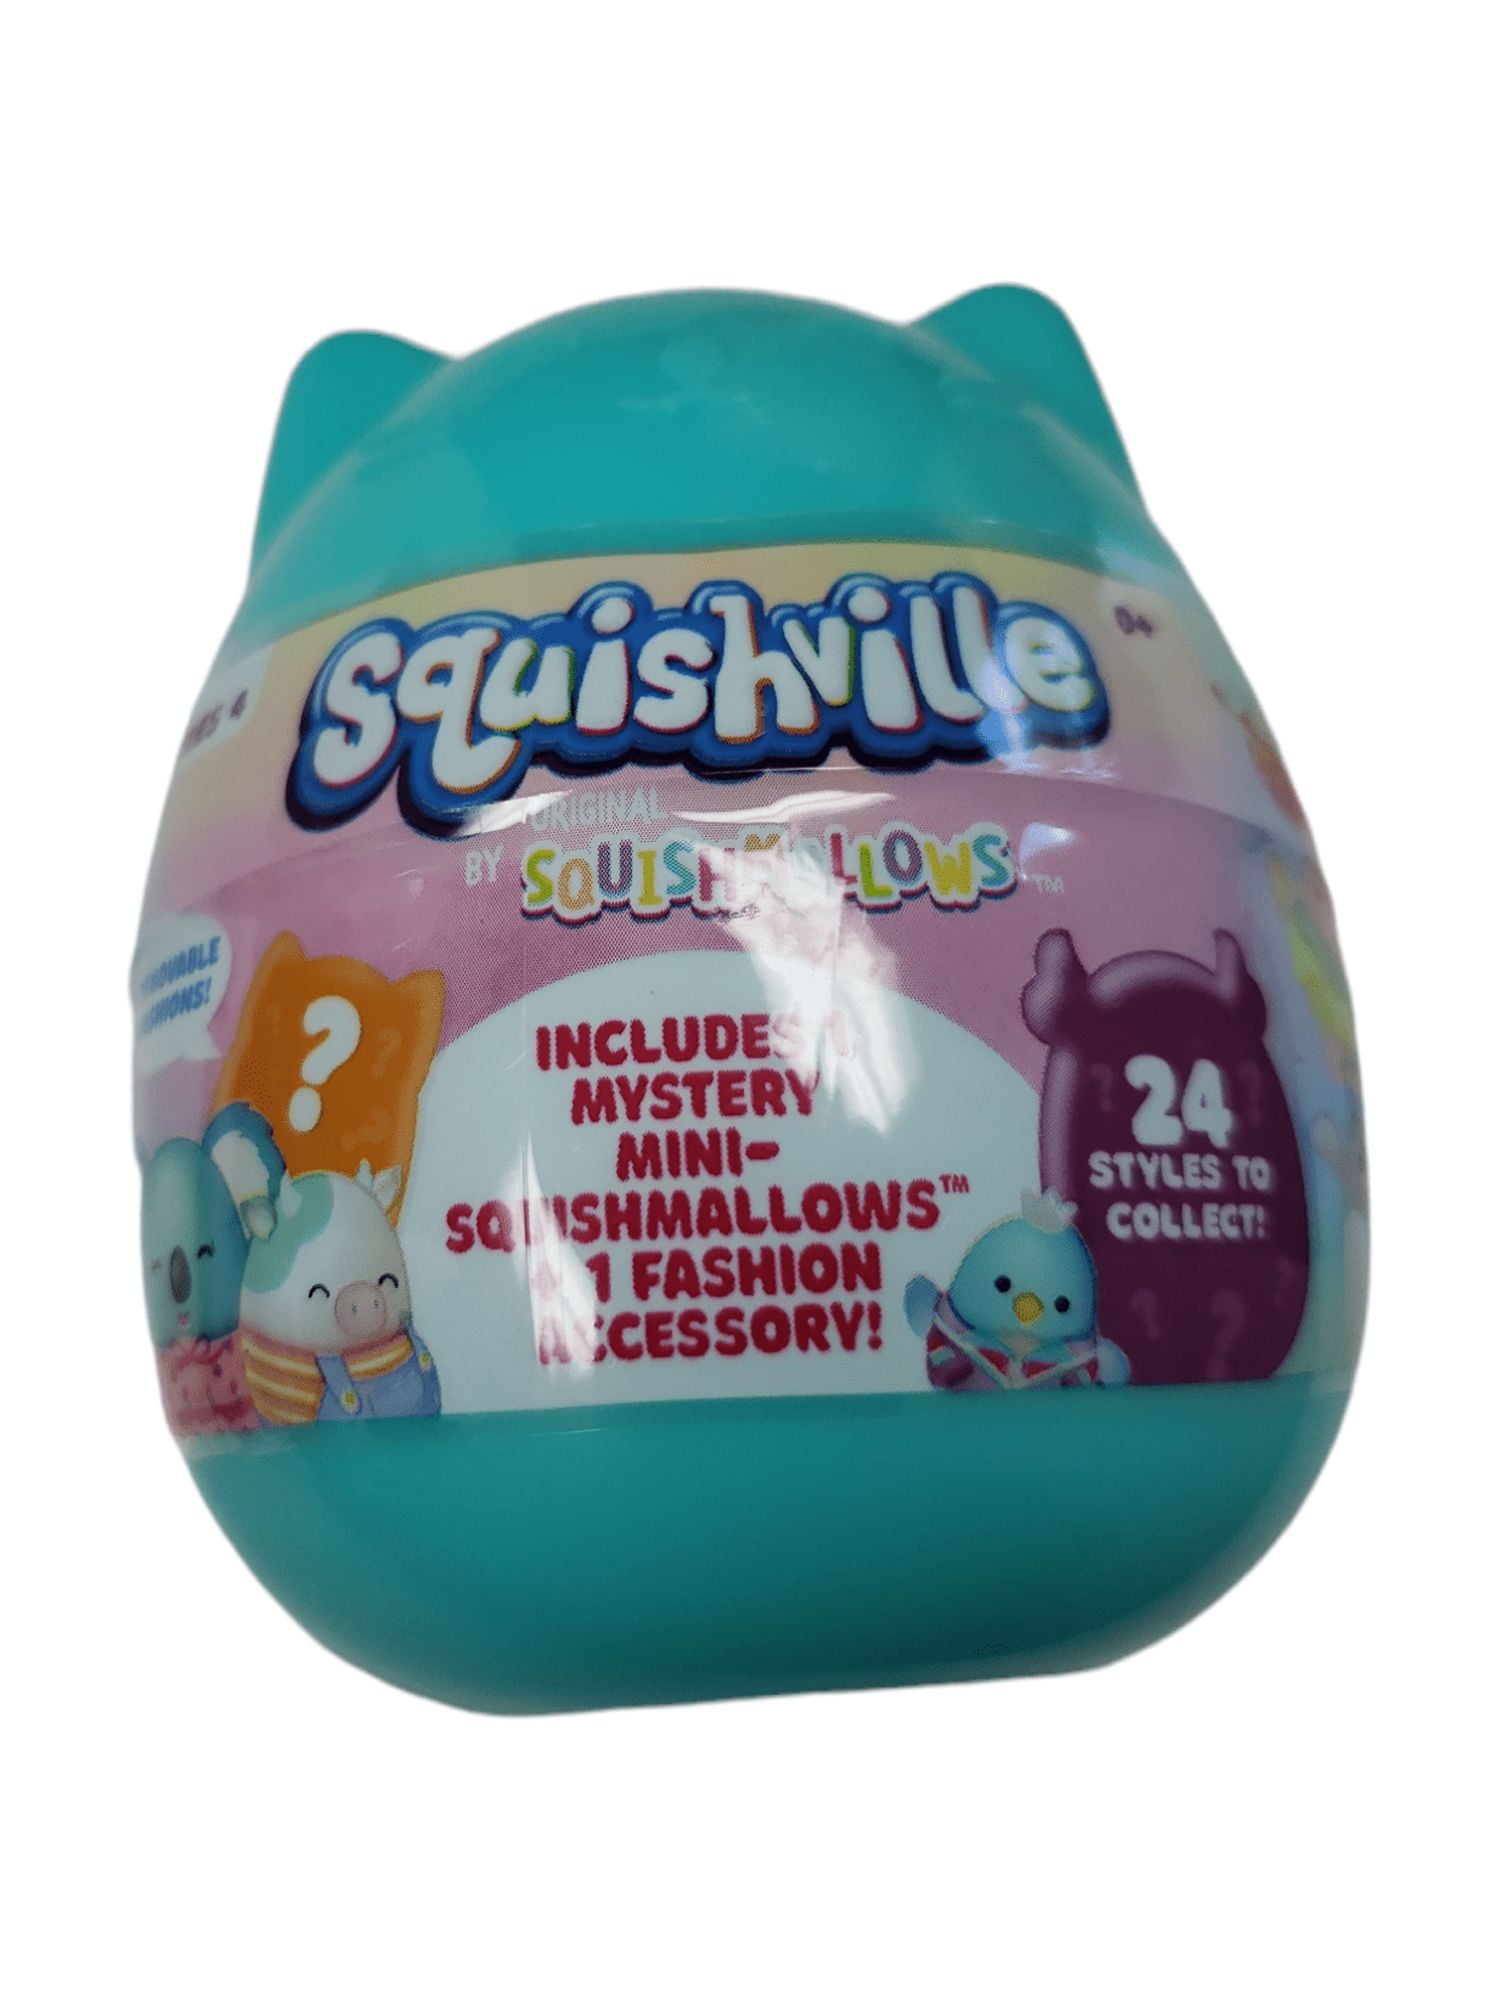 Squishmallows Squishville Mystery Mini Plush - Series 4 - Shop